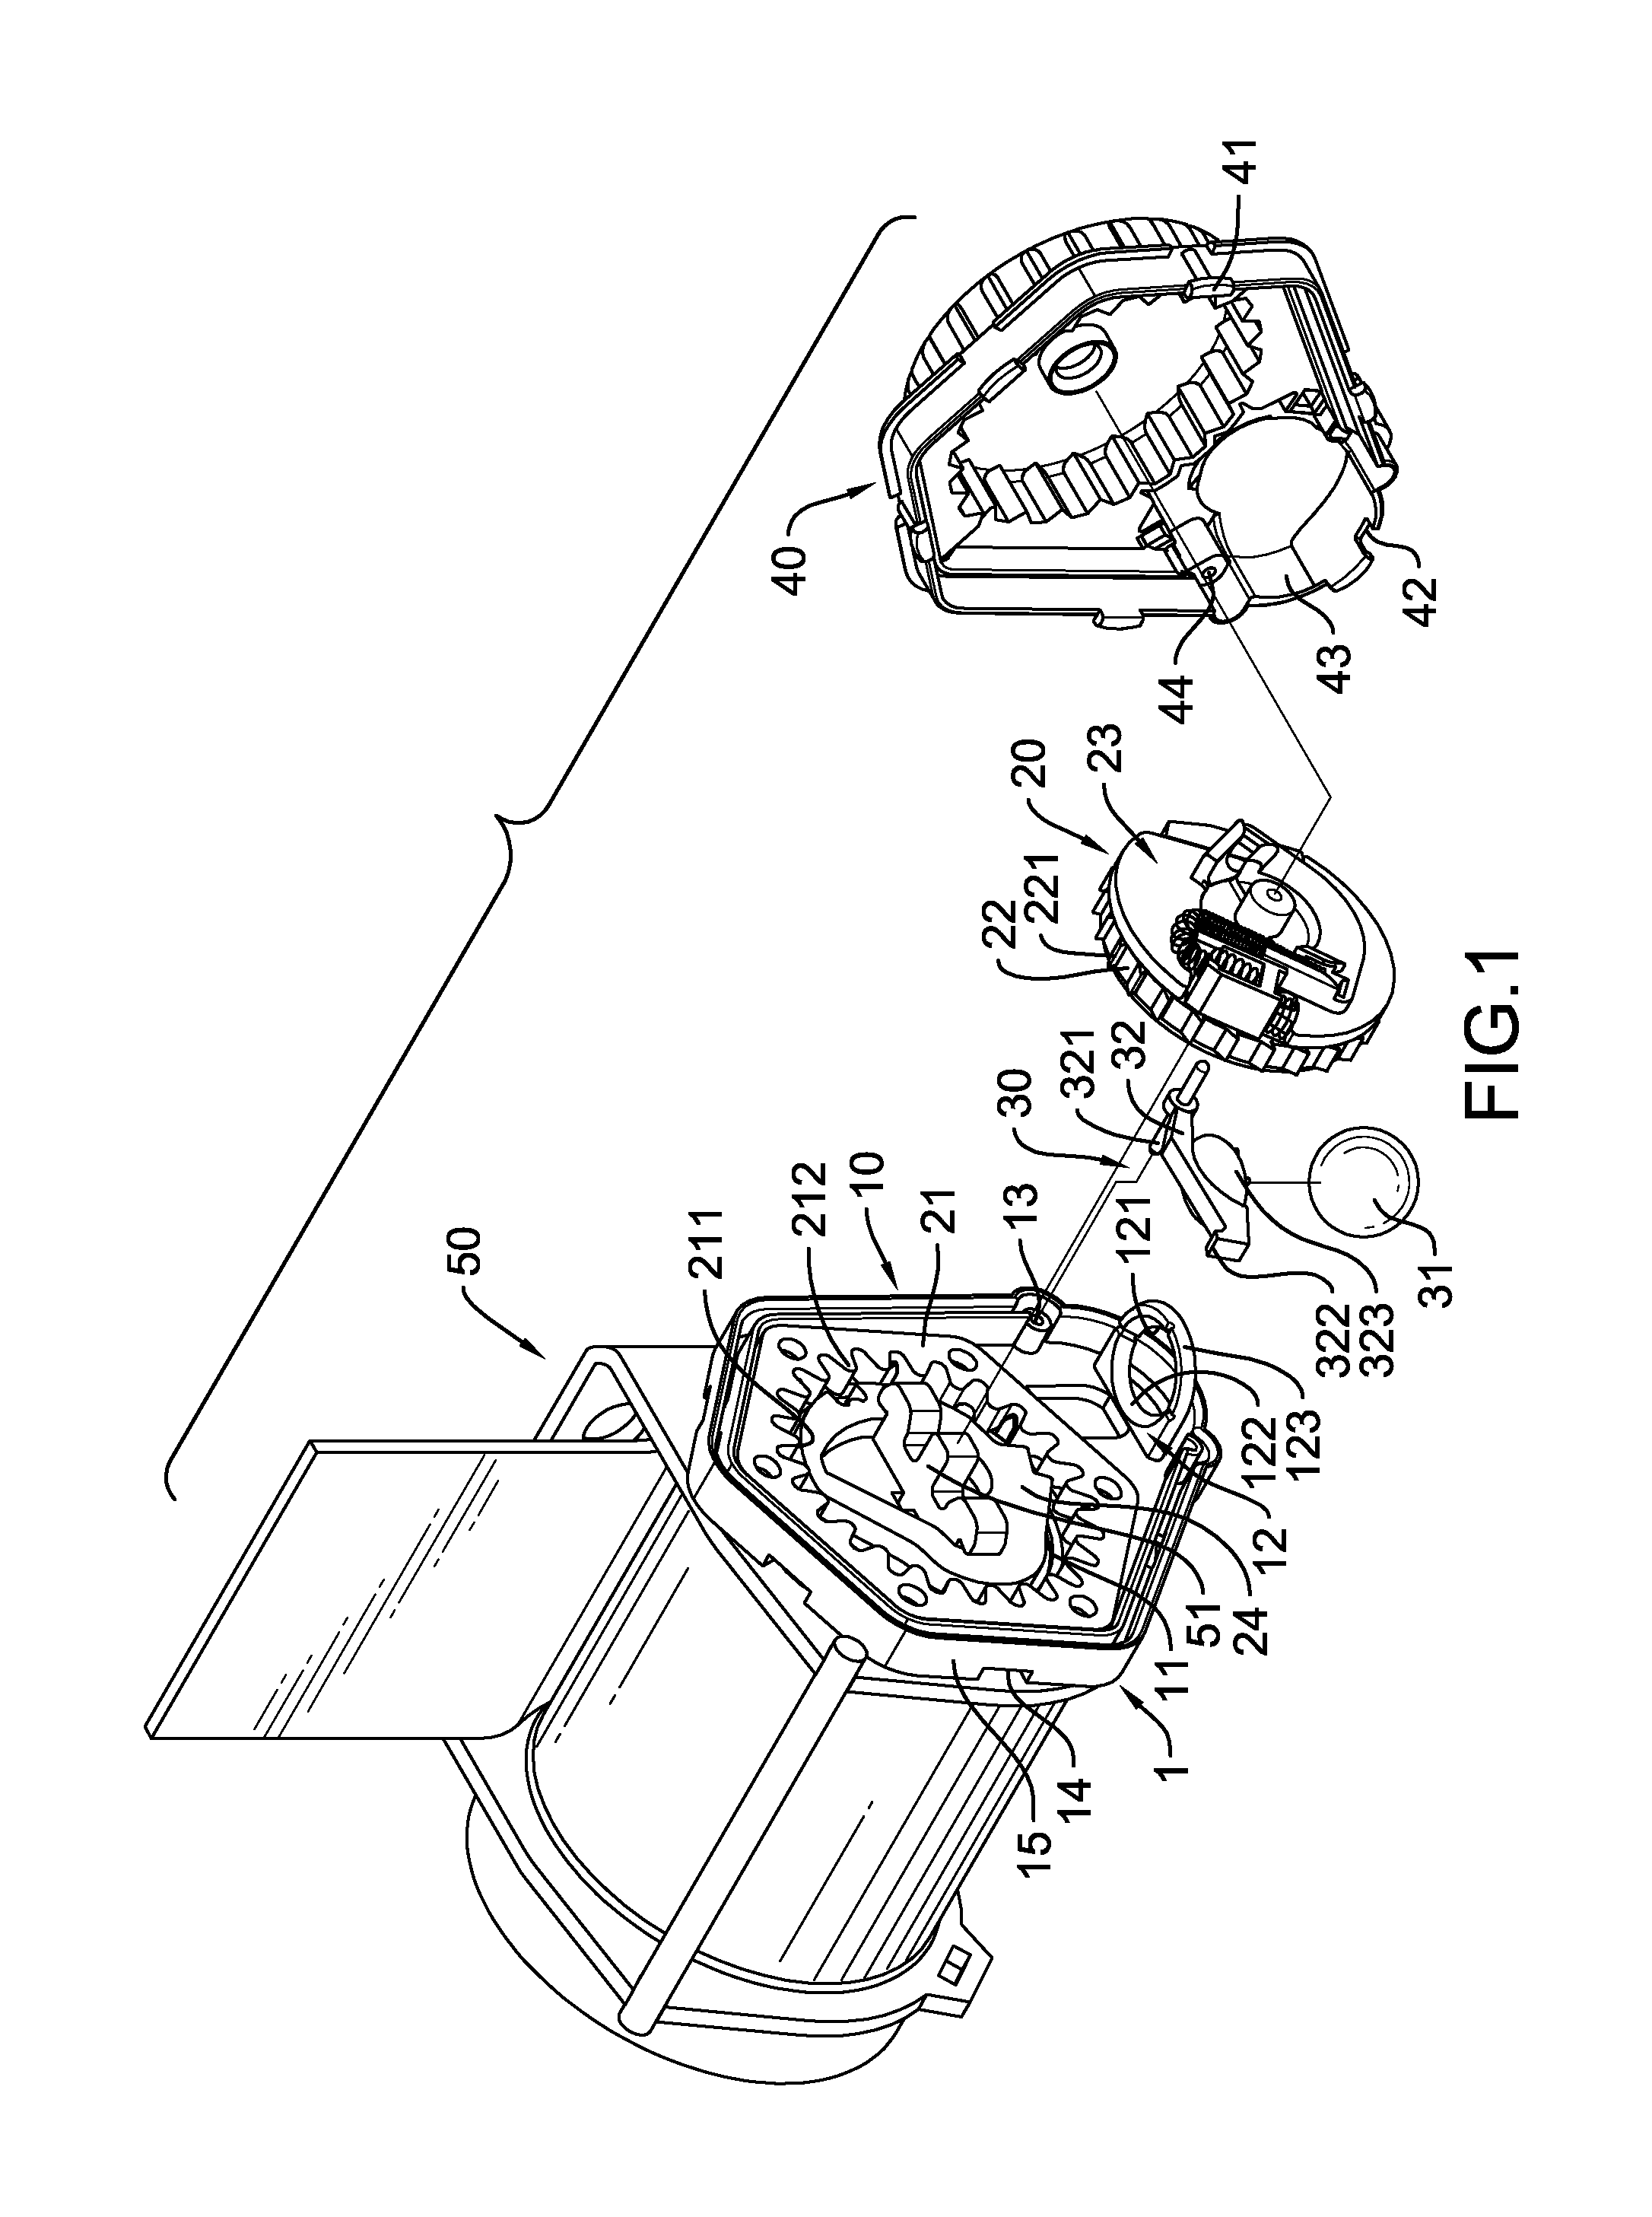 Locking mechanism for a seat belt